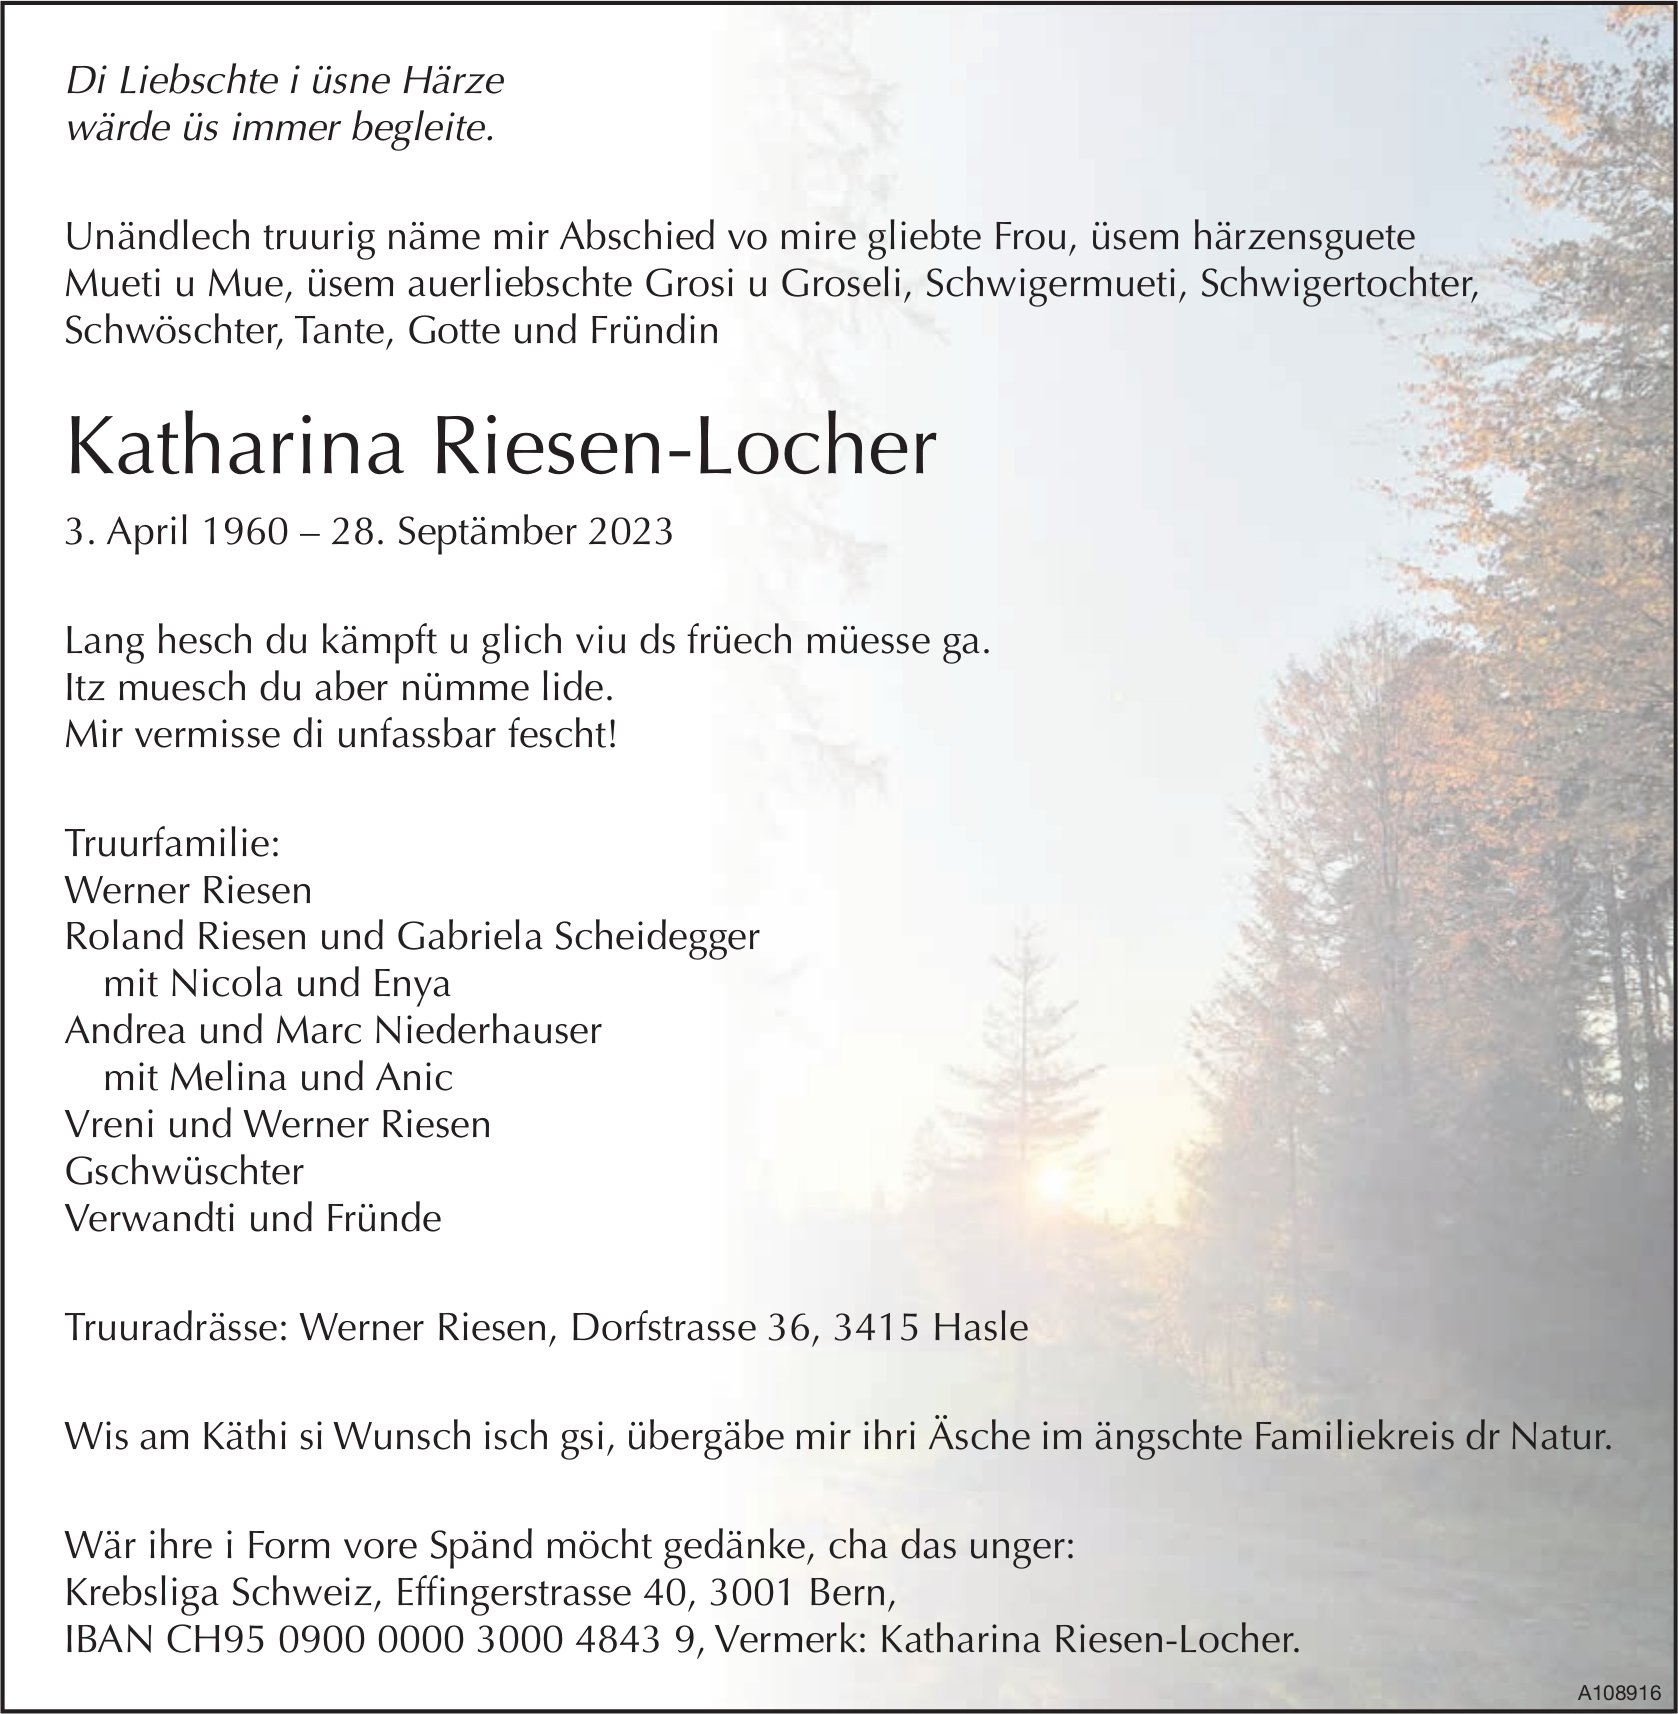 Katharina Riesen-Locher, September 2023 / TA